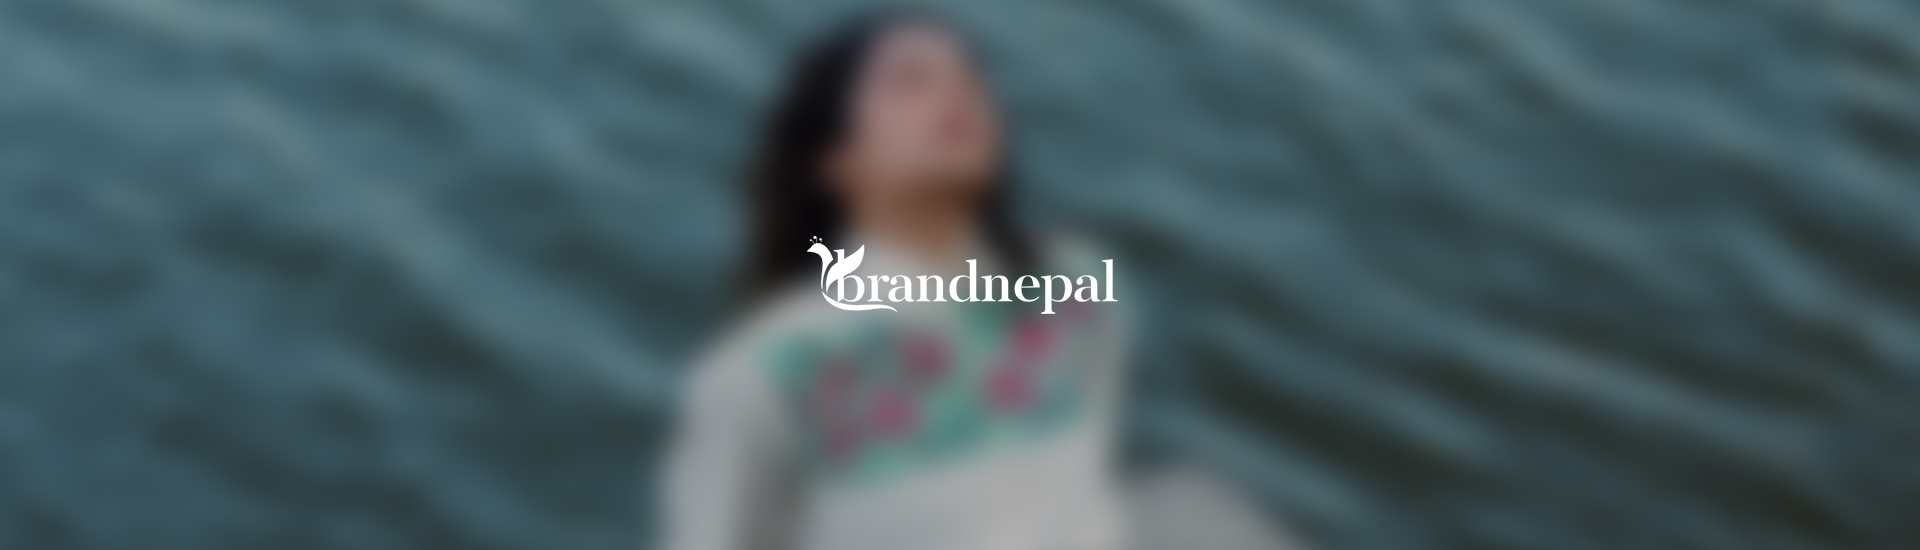 The Brand Nepal